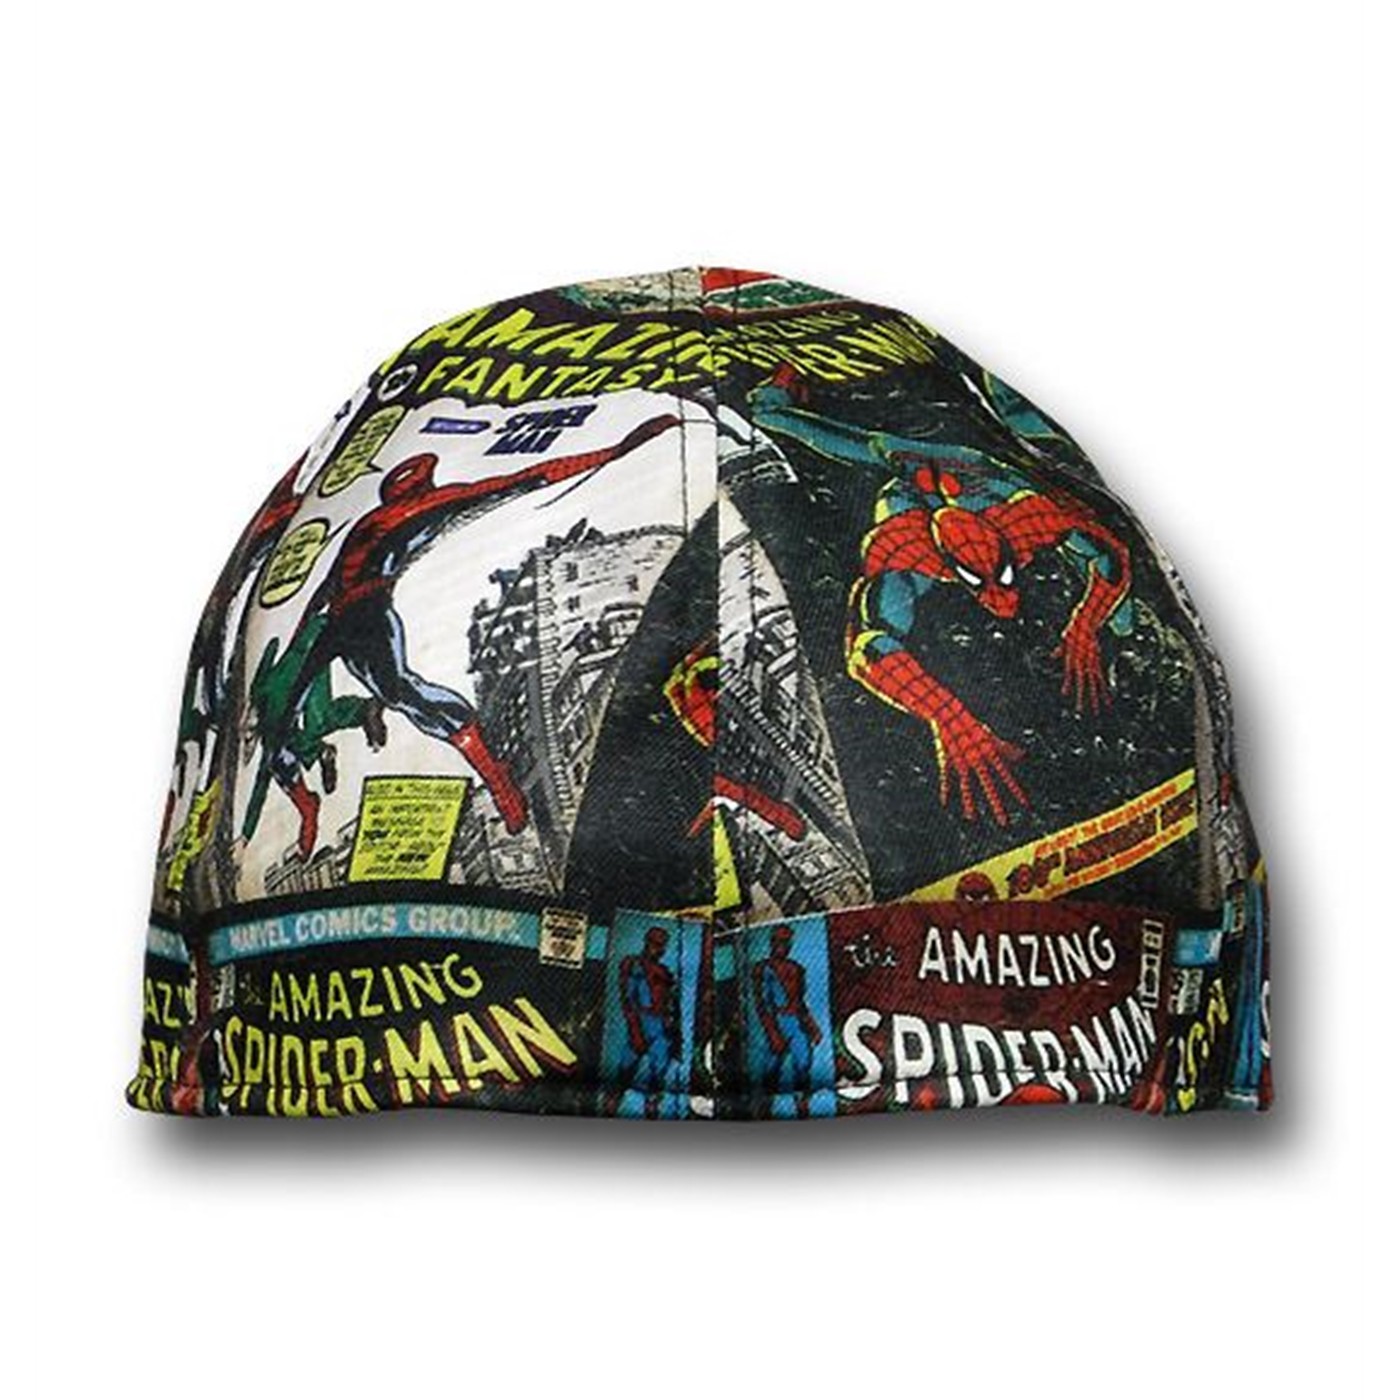 Amazing Spiderman Comic Covers Flat Bill Cap